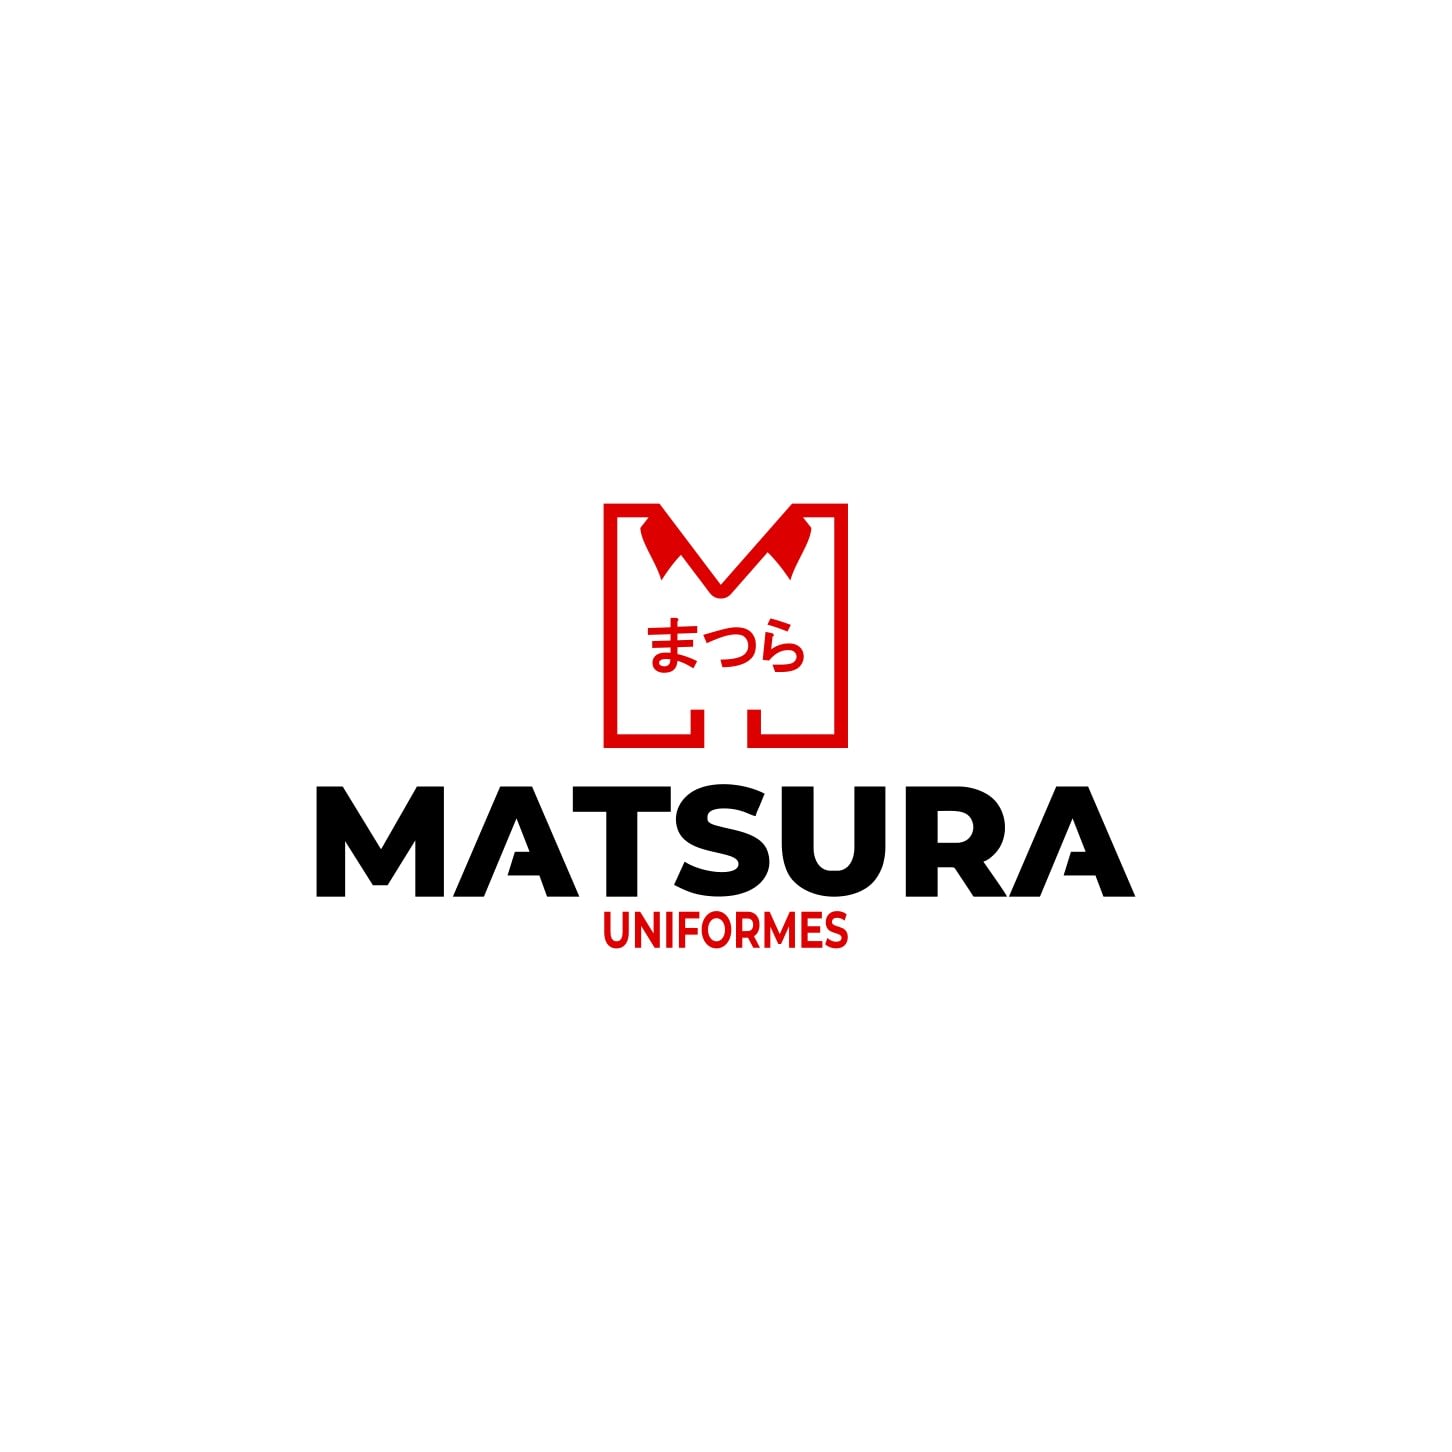 Uniformes Matsura